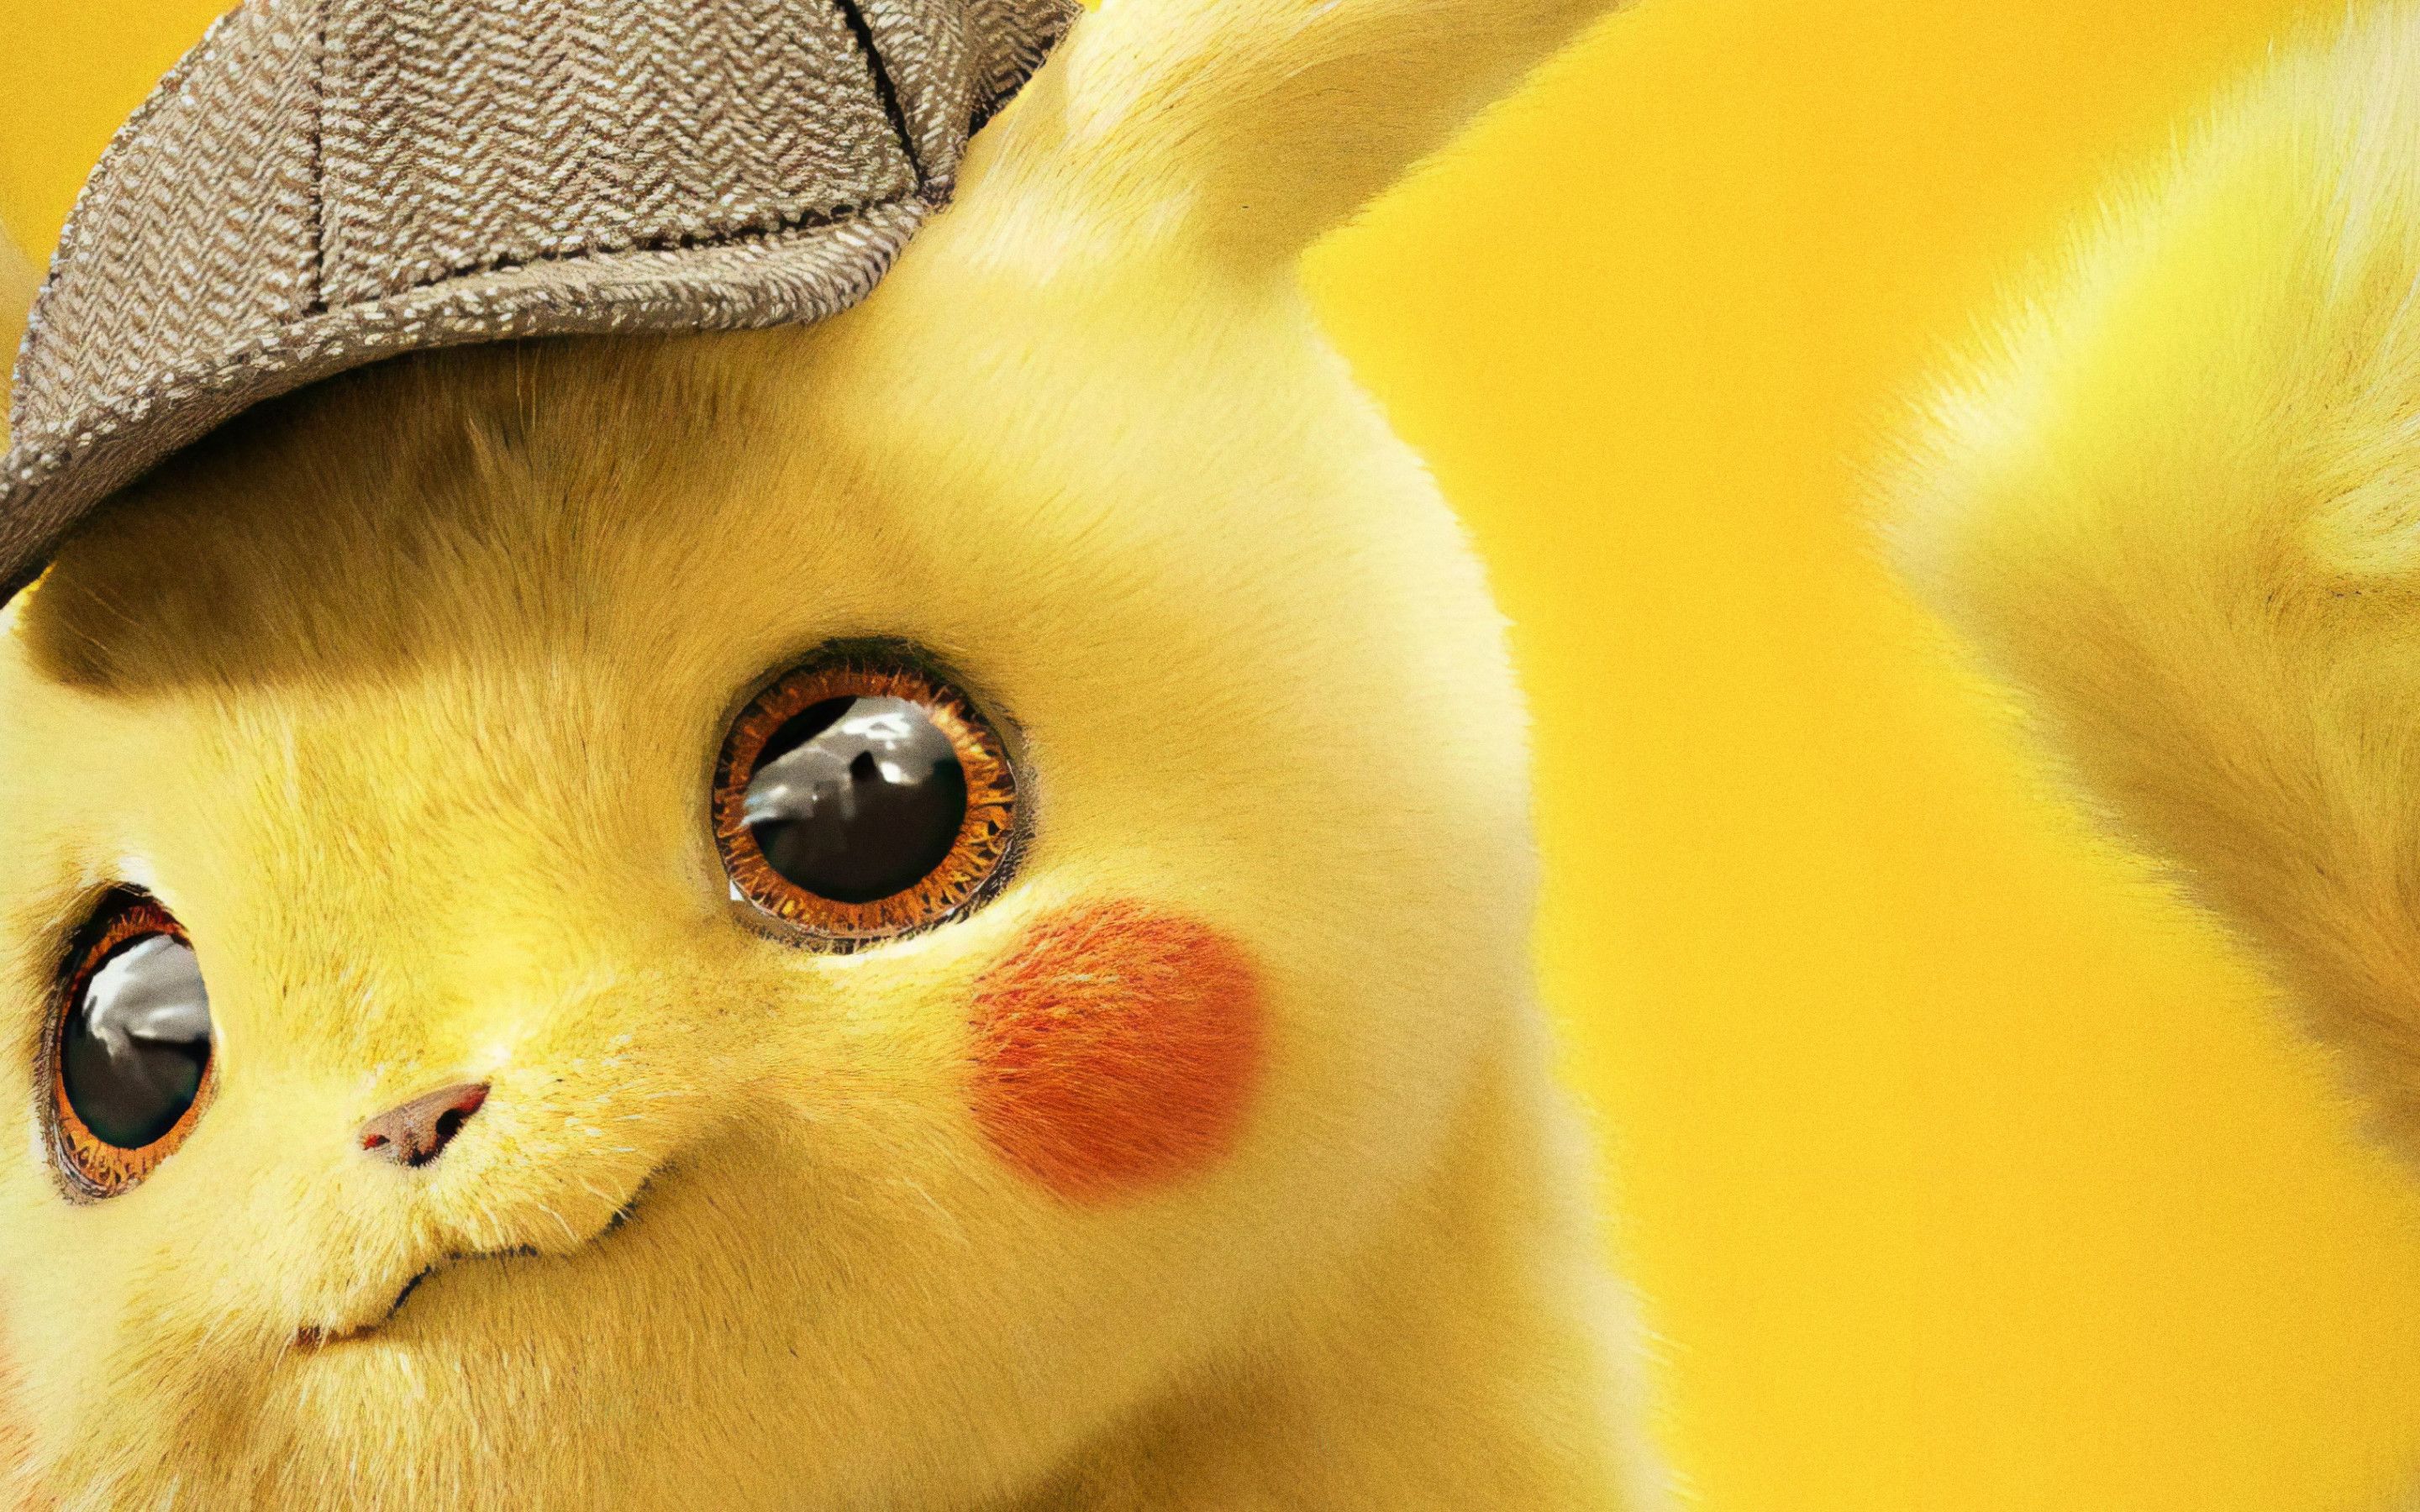 250+Pikachu Wallpaper 4k & Free Images